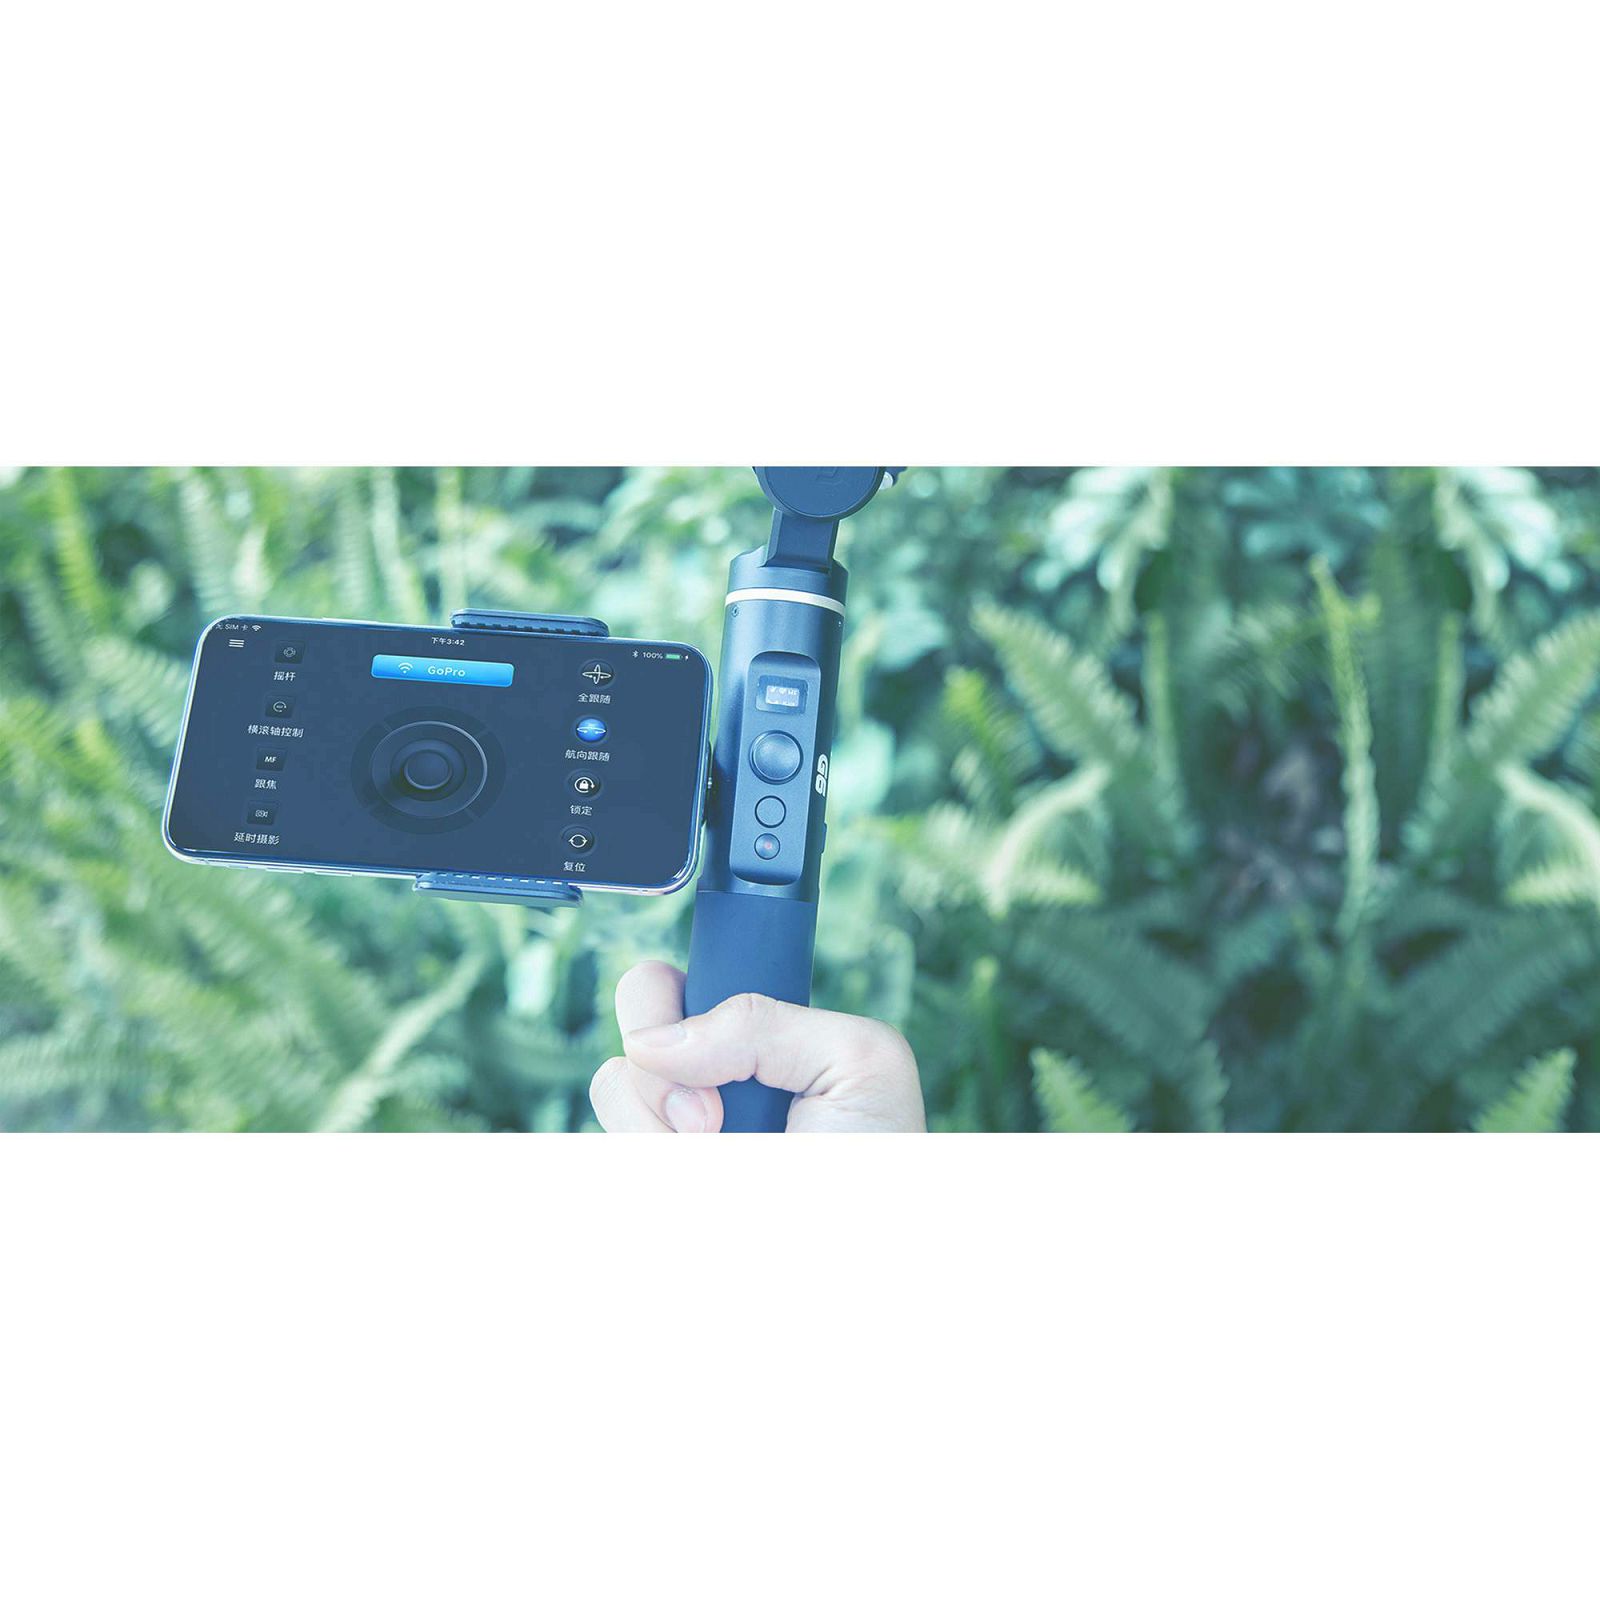 FeiyuTech G6 3-axis Handheld gimbal stabilizer for Action cam GoPro HERO6, HERO5, HERO4, HERO3+, HERO3, Yi cam 4K, AEE 3-osni stabilizator za video snimanje